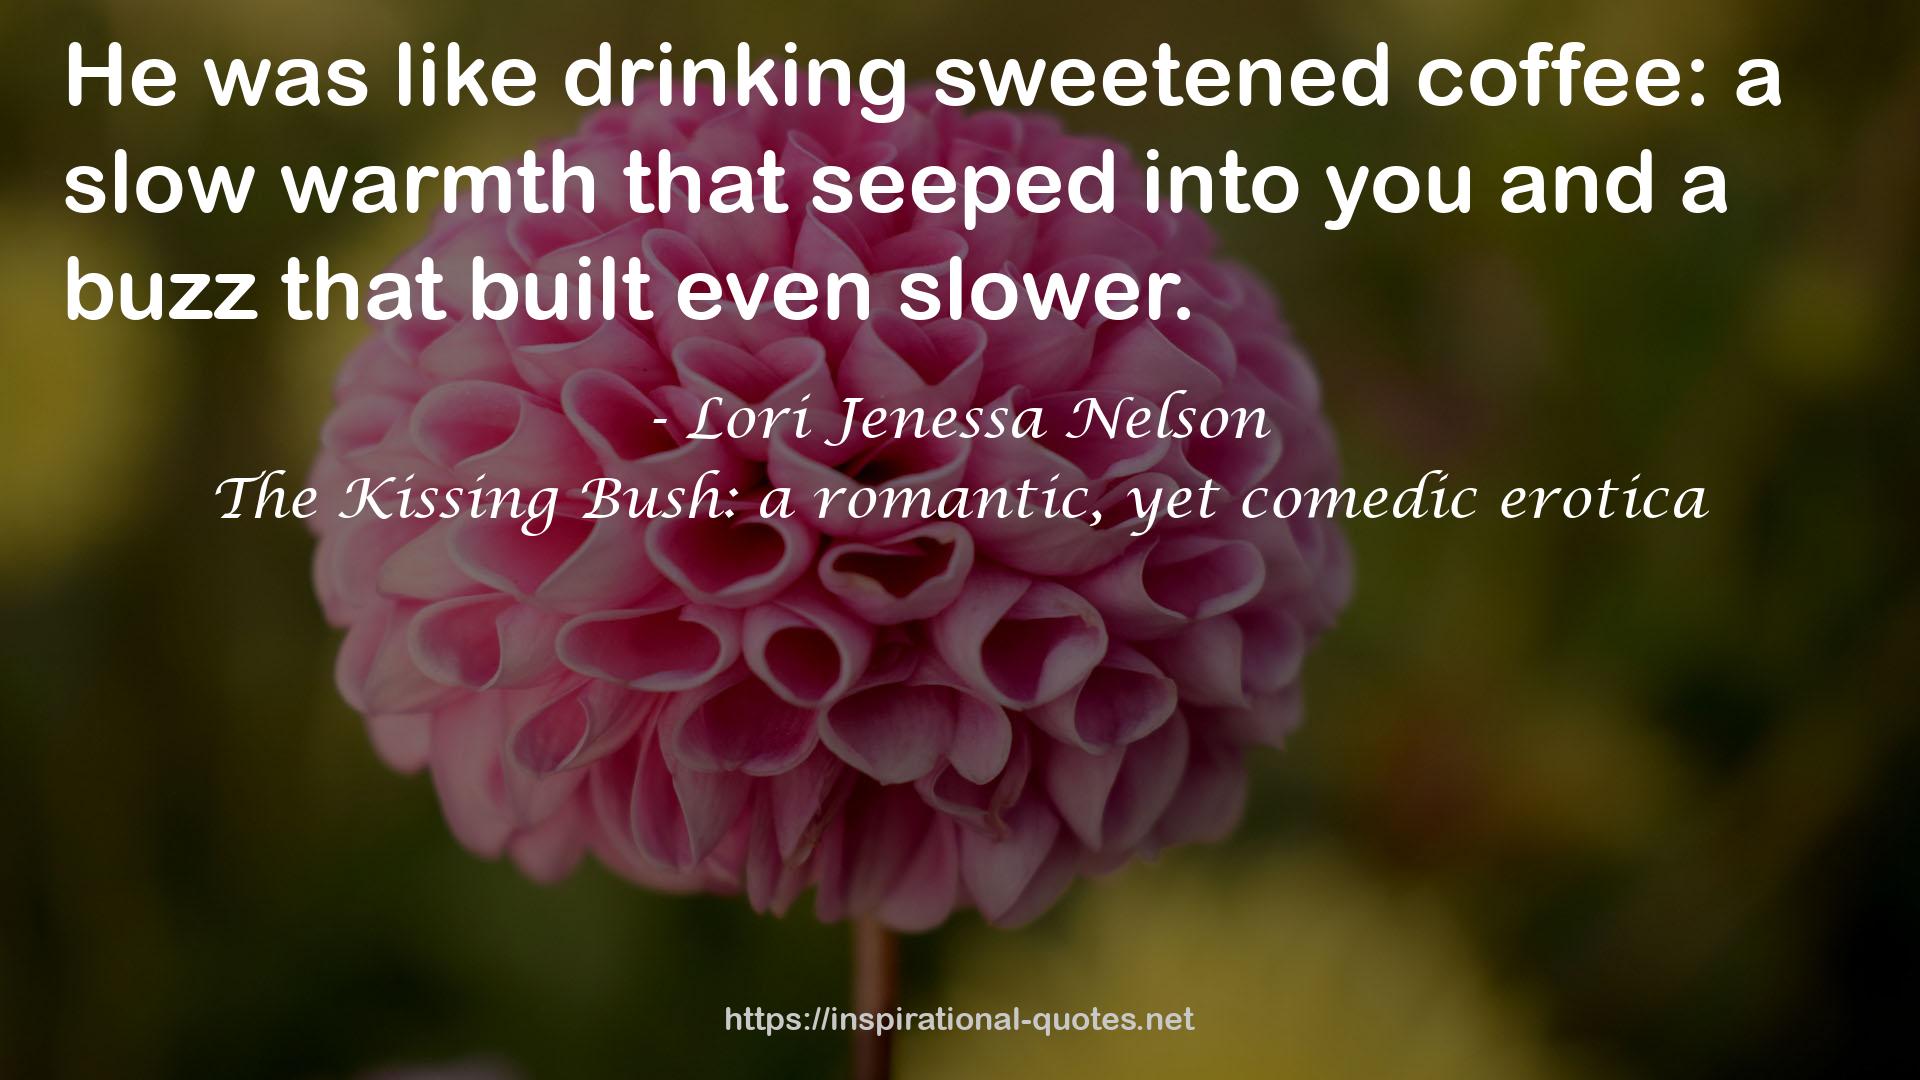 The Kissing Bush: a romantic, yet comedic erotica QUOTES